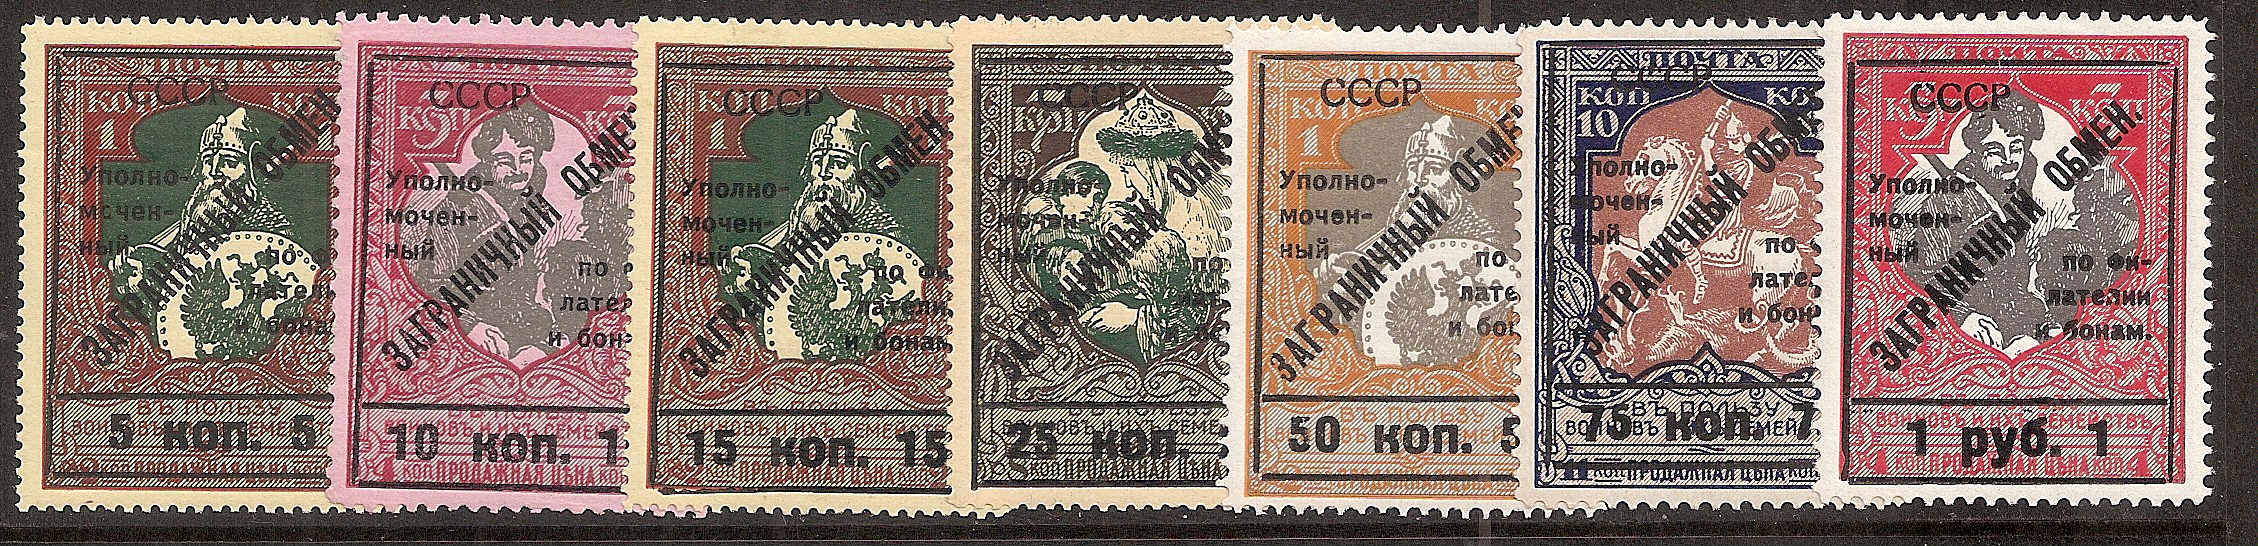 PRussia Specialized - hilatelic Exchage Tax Philatelic ExchangeTax Stamps. Michel 0 Michel 1-2 Michel 1-2 Michel 2 Michel 2var Michel 7-13 